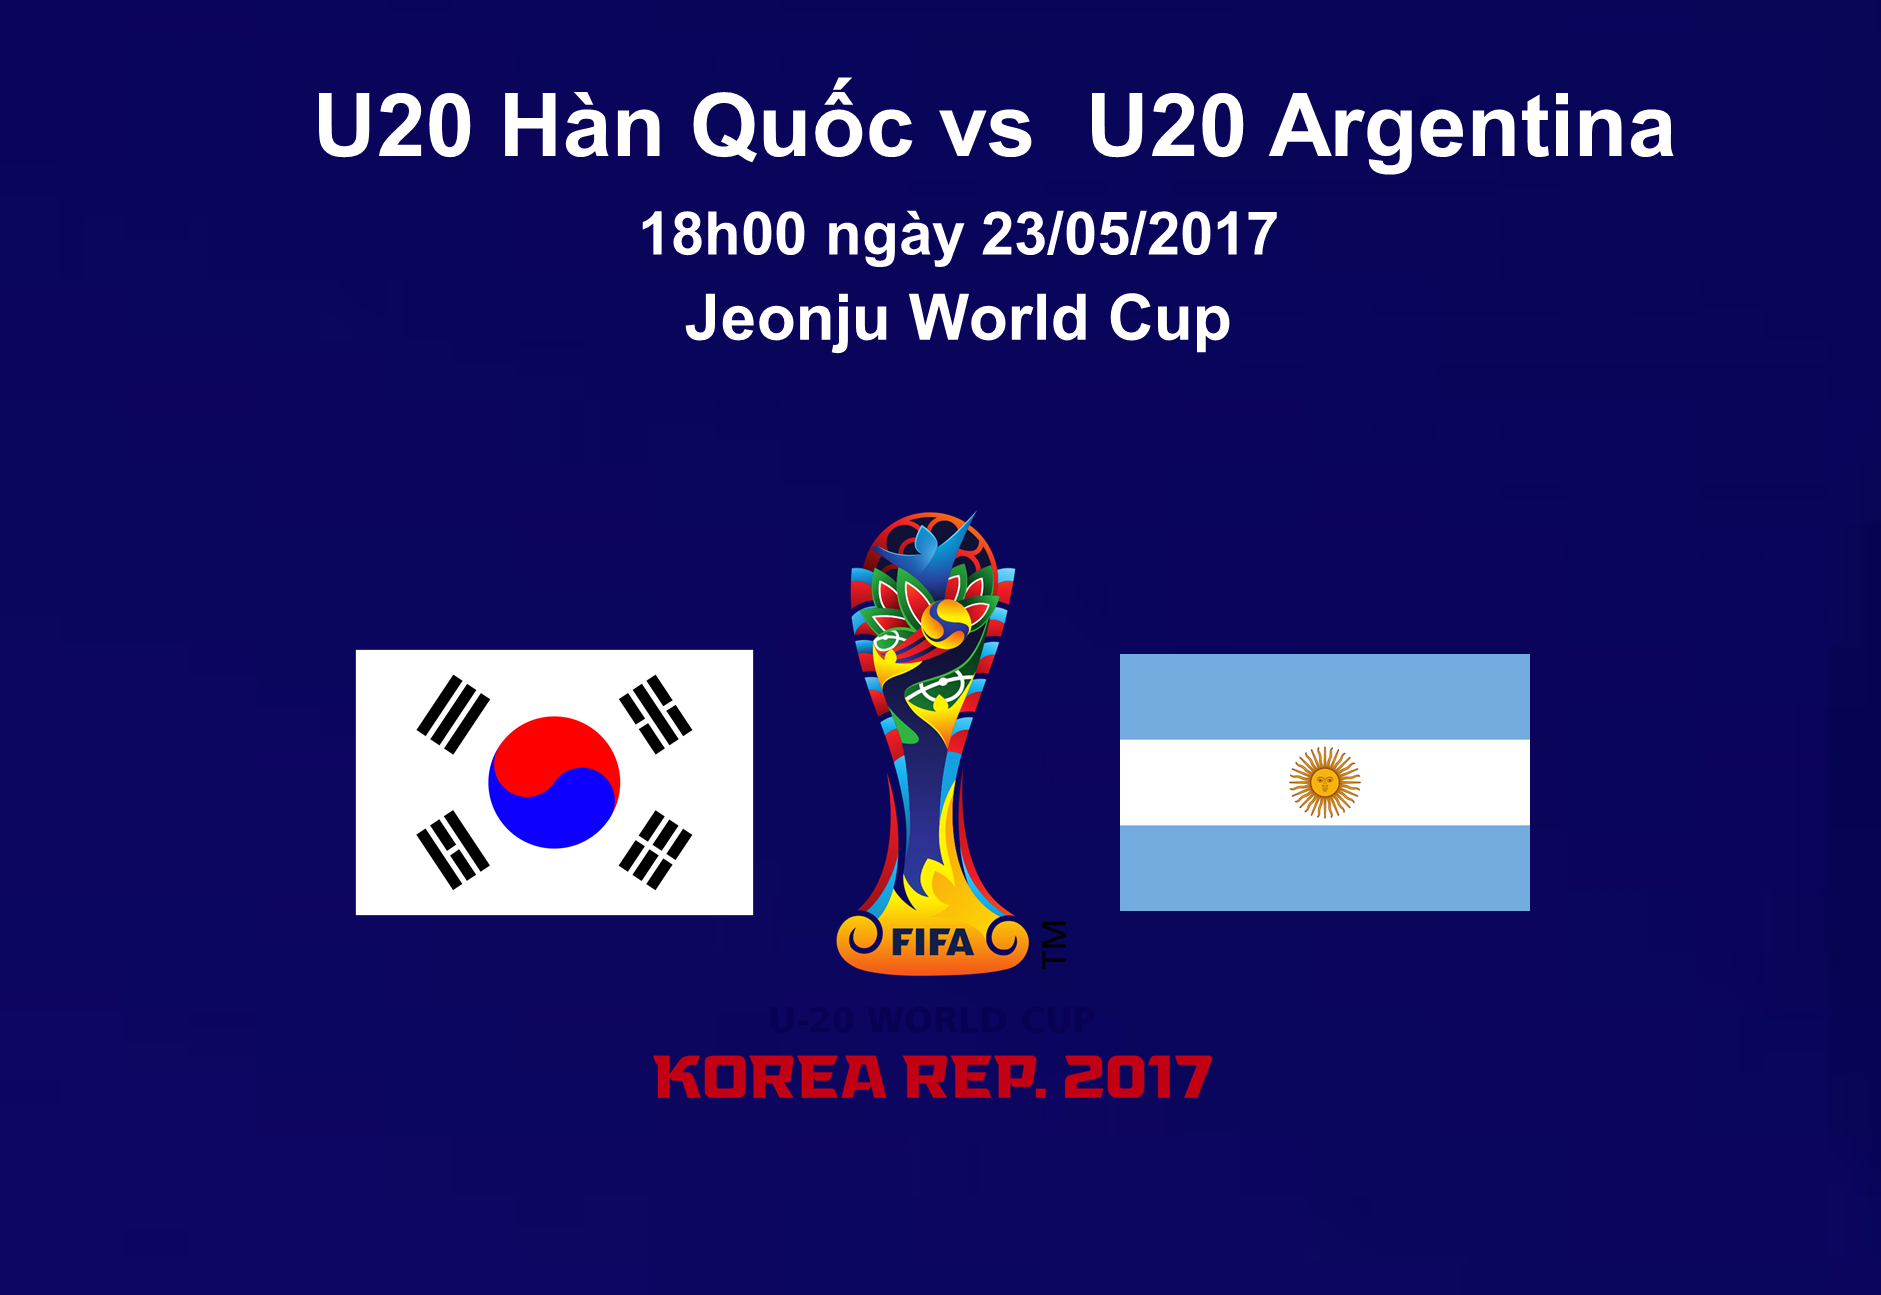 u20-han-quoc-u20-argentina